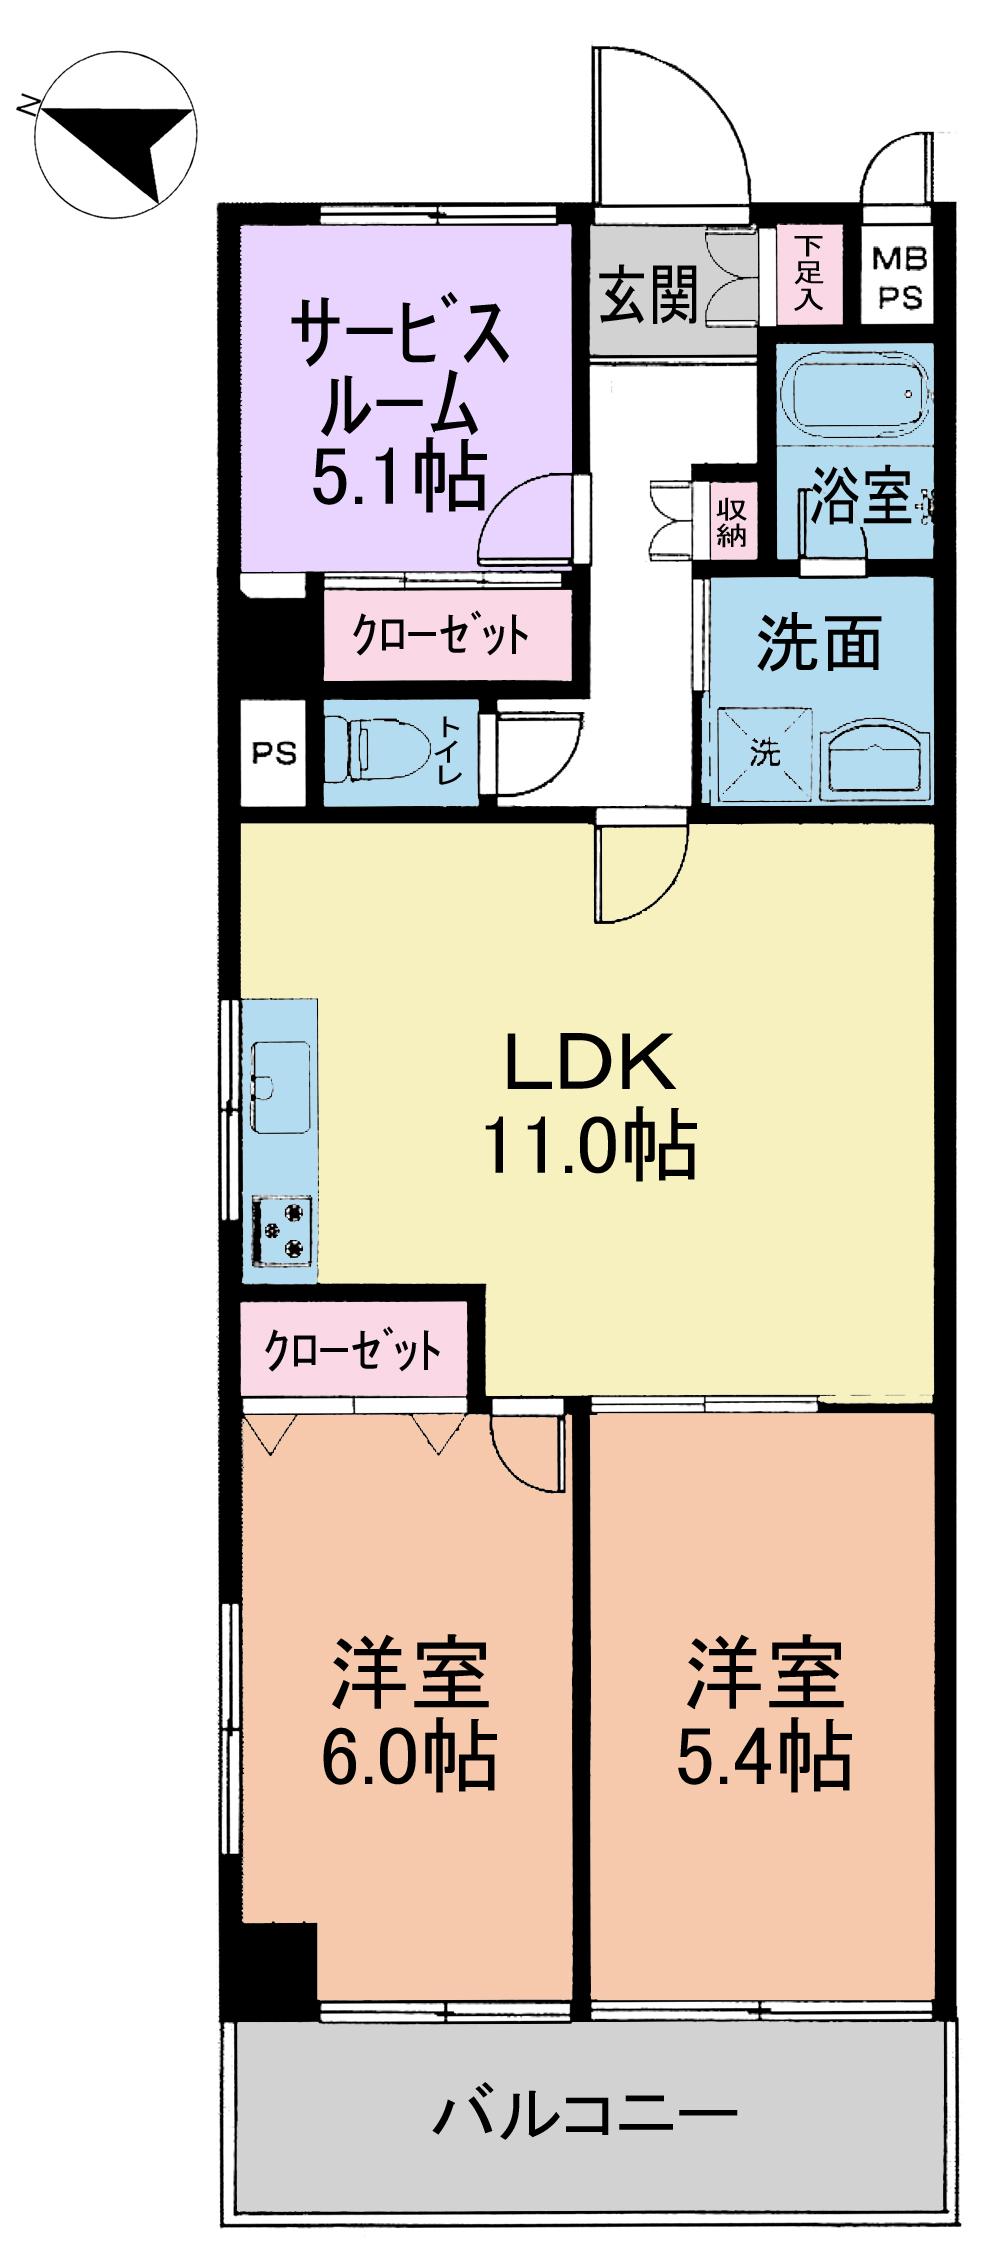 Floor plan. 2LDK + S (storeroom), Price 19,800,000 yen, Occupied area 60.75 sq m , Balcony area 6.49 sq m